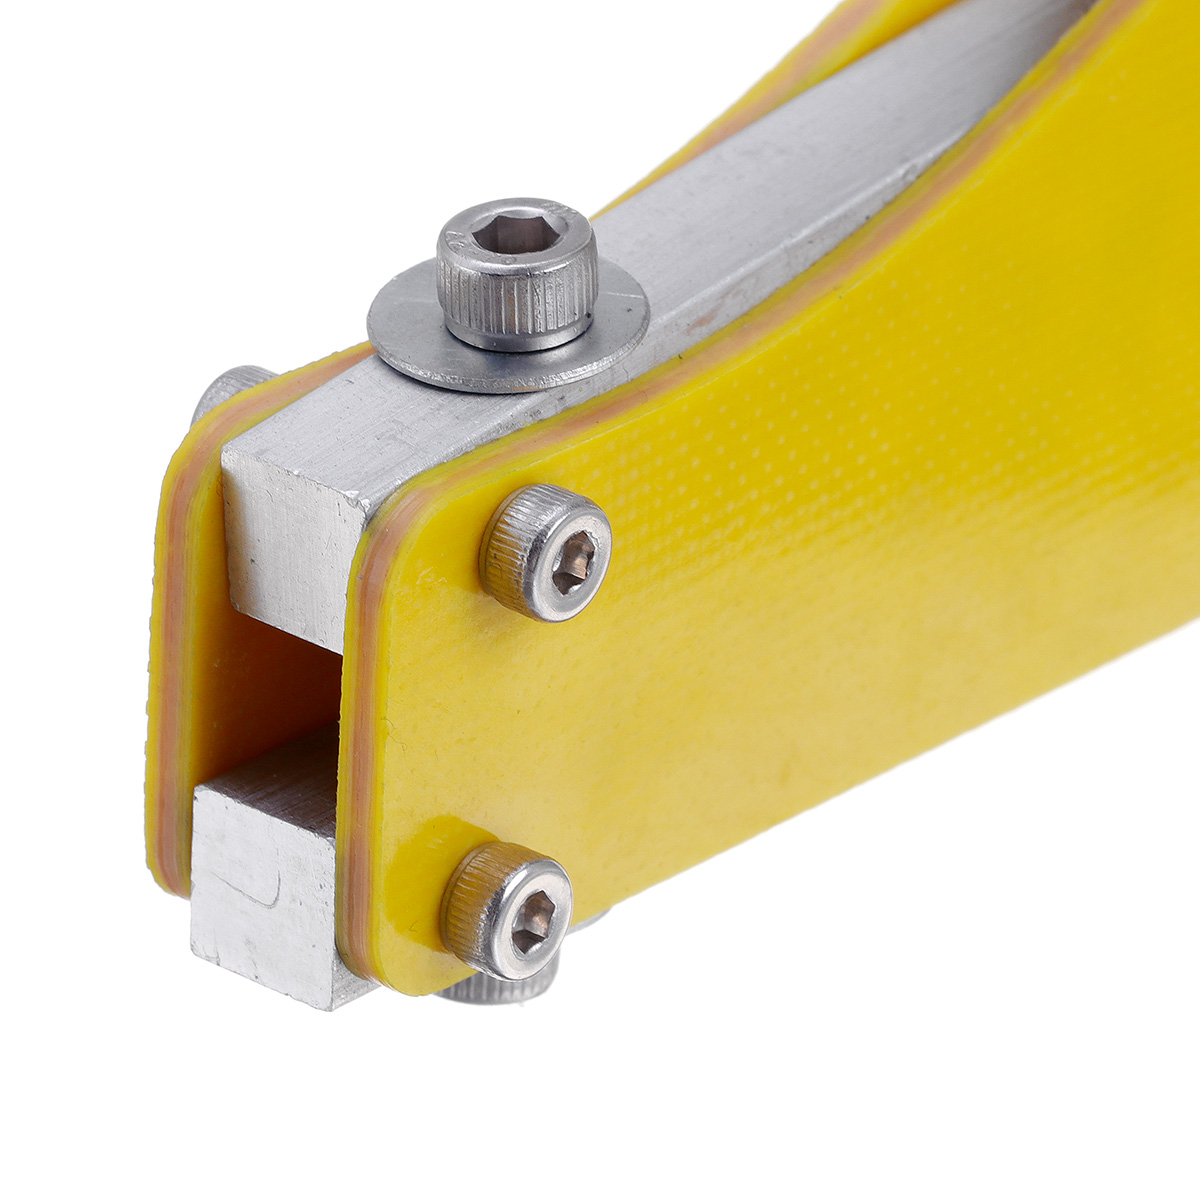 Portable-Spot-Welder-Special-Shape-Metal-Welding-Pliers-18650-Battery-Spot-Welder-Accessories-Metal--1847767-8